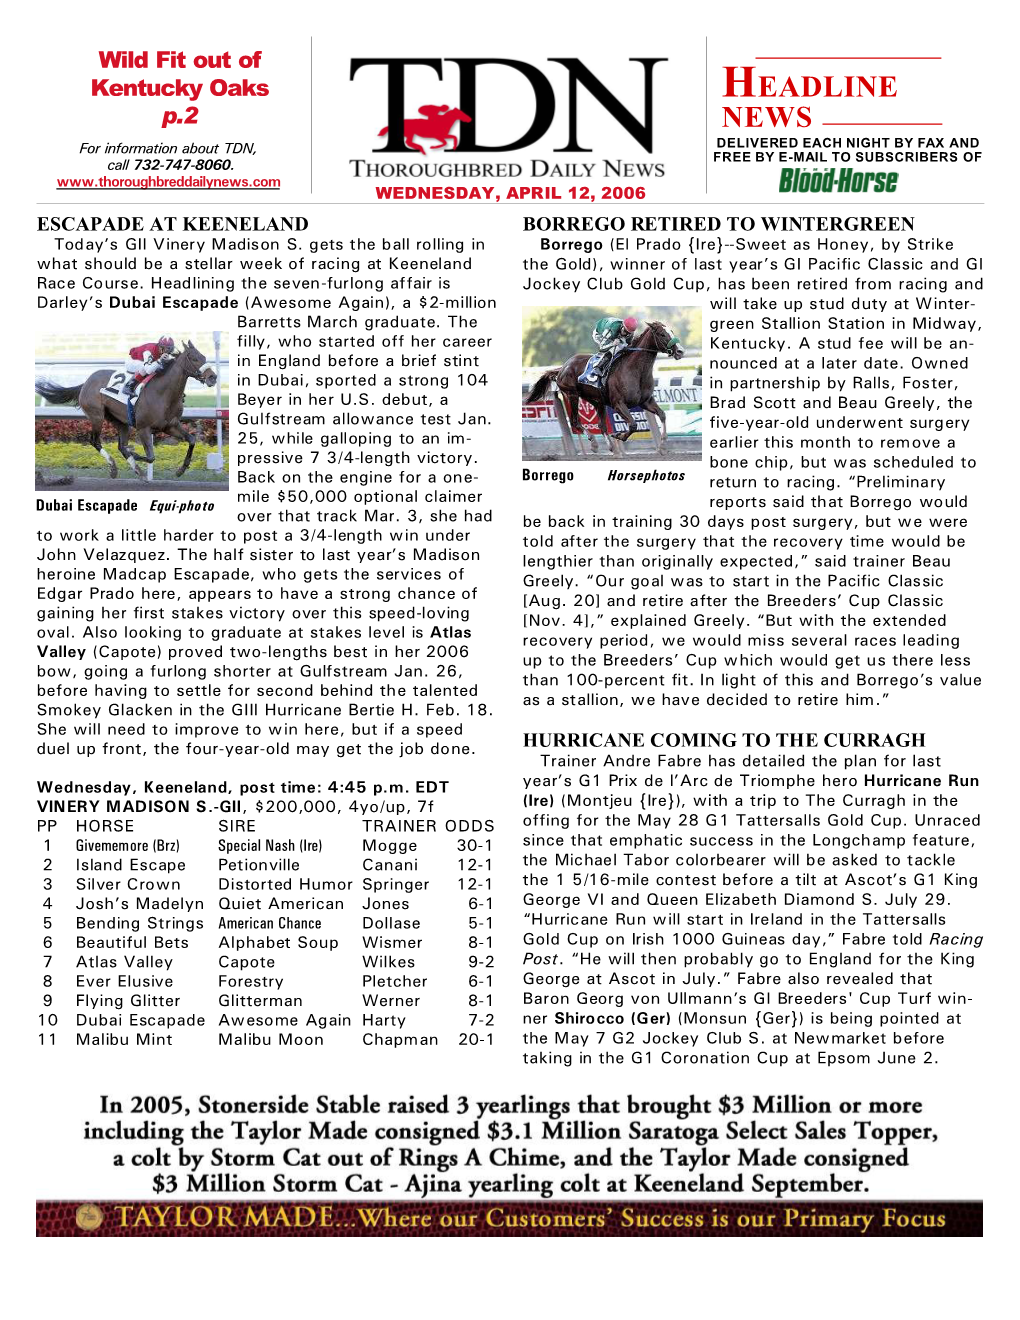 HEADLINE NEWS • 4/12/06 • PAGE 2 of 8